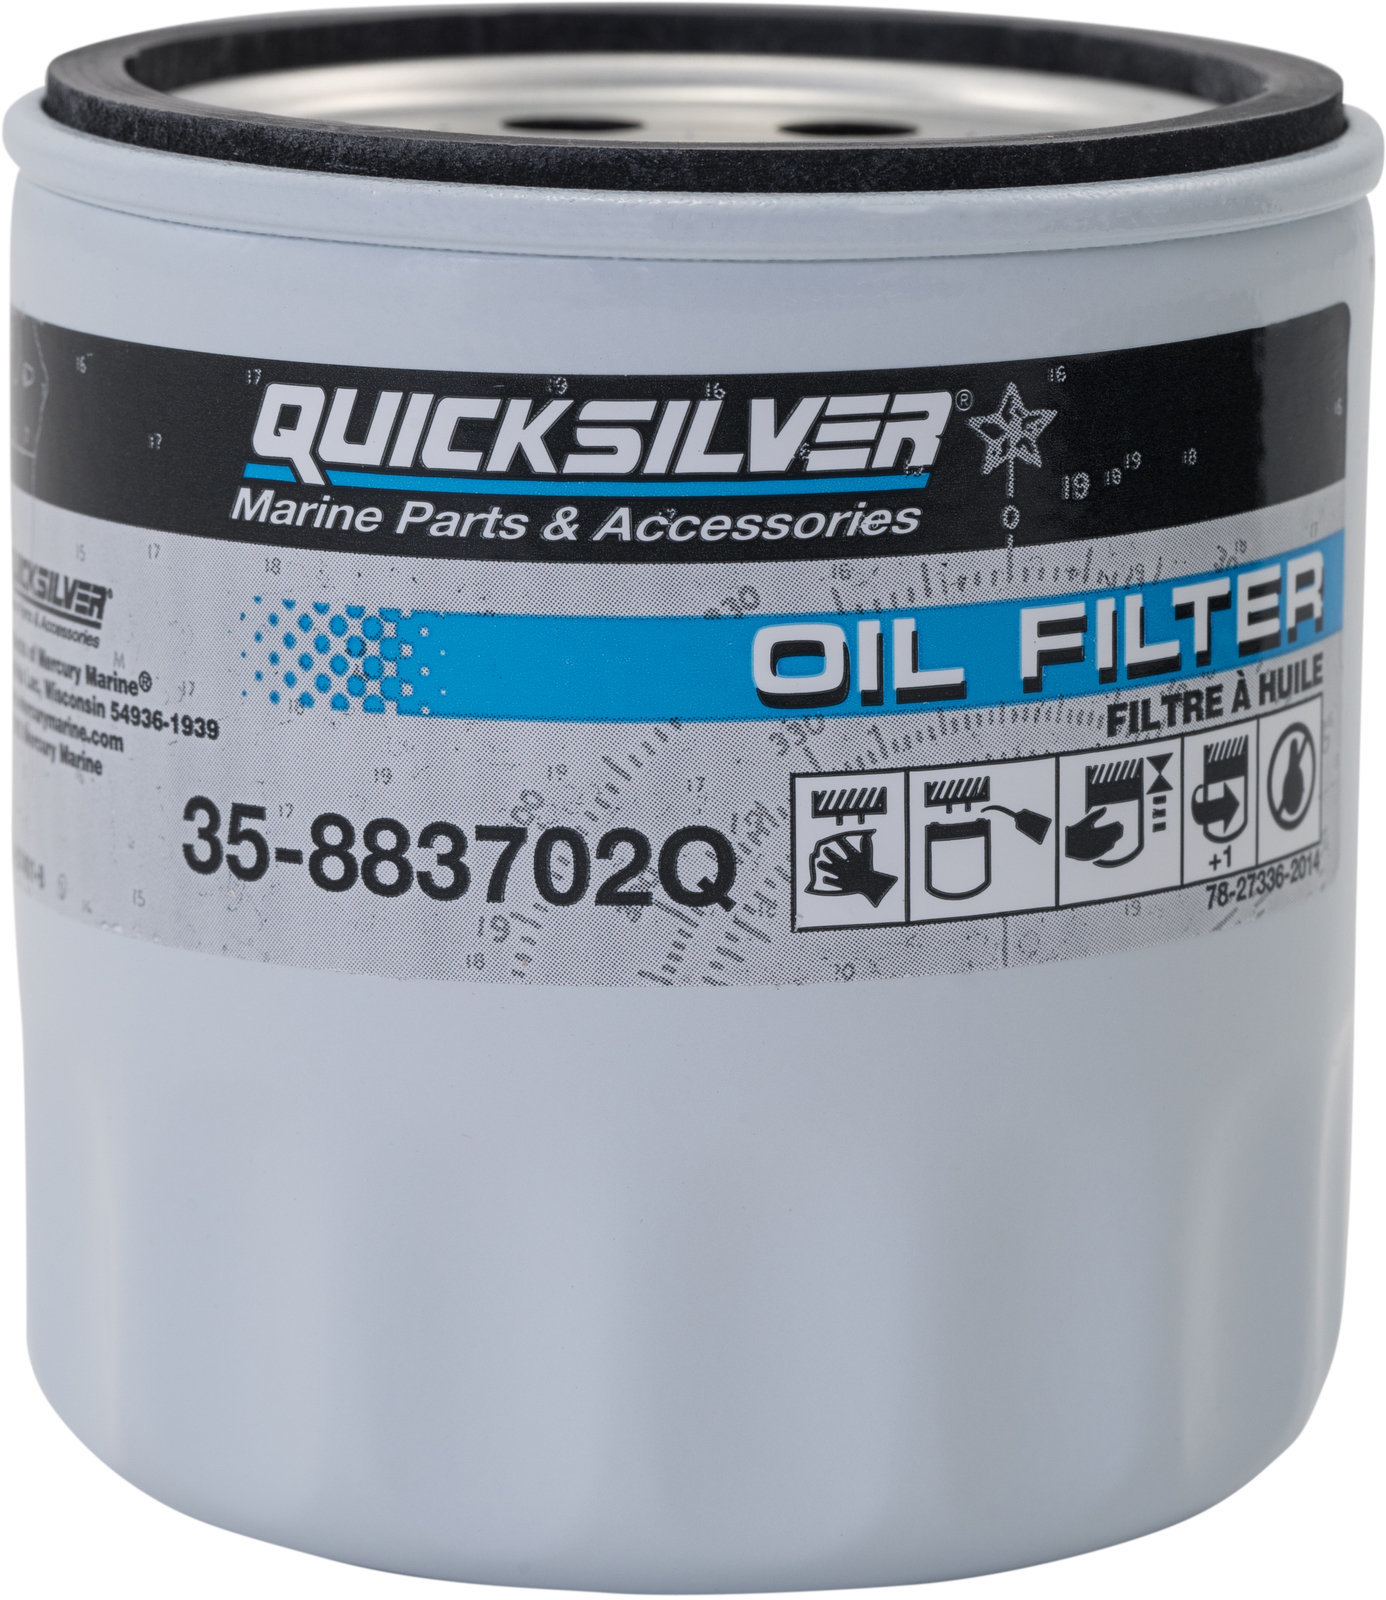 Boat Filters Quicksilver Oil Filter 35-883702Q